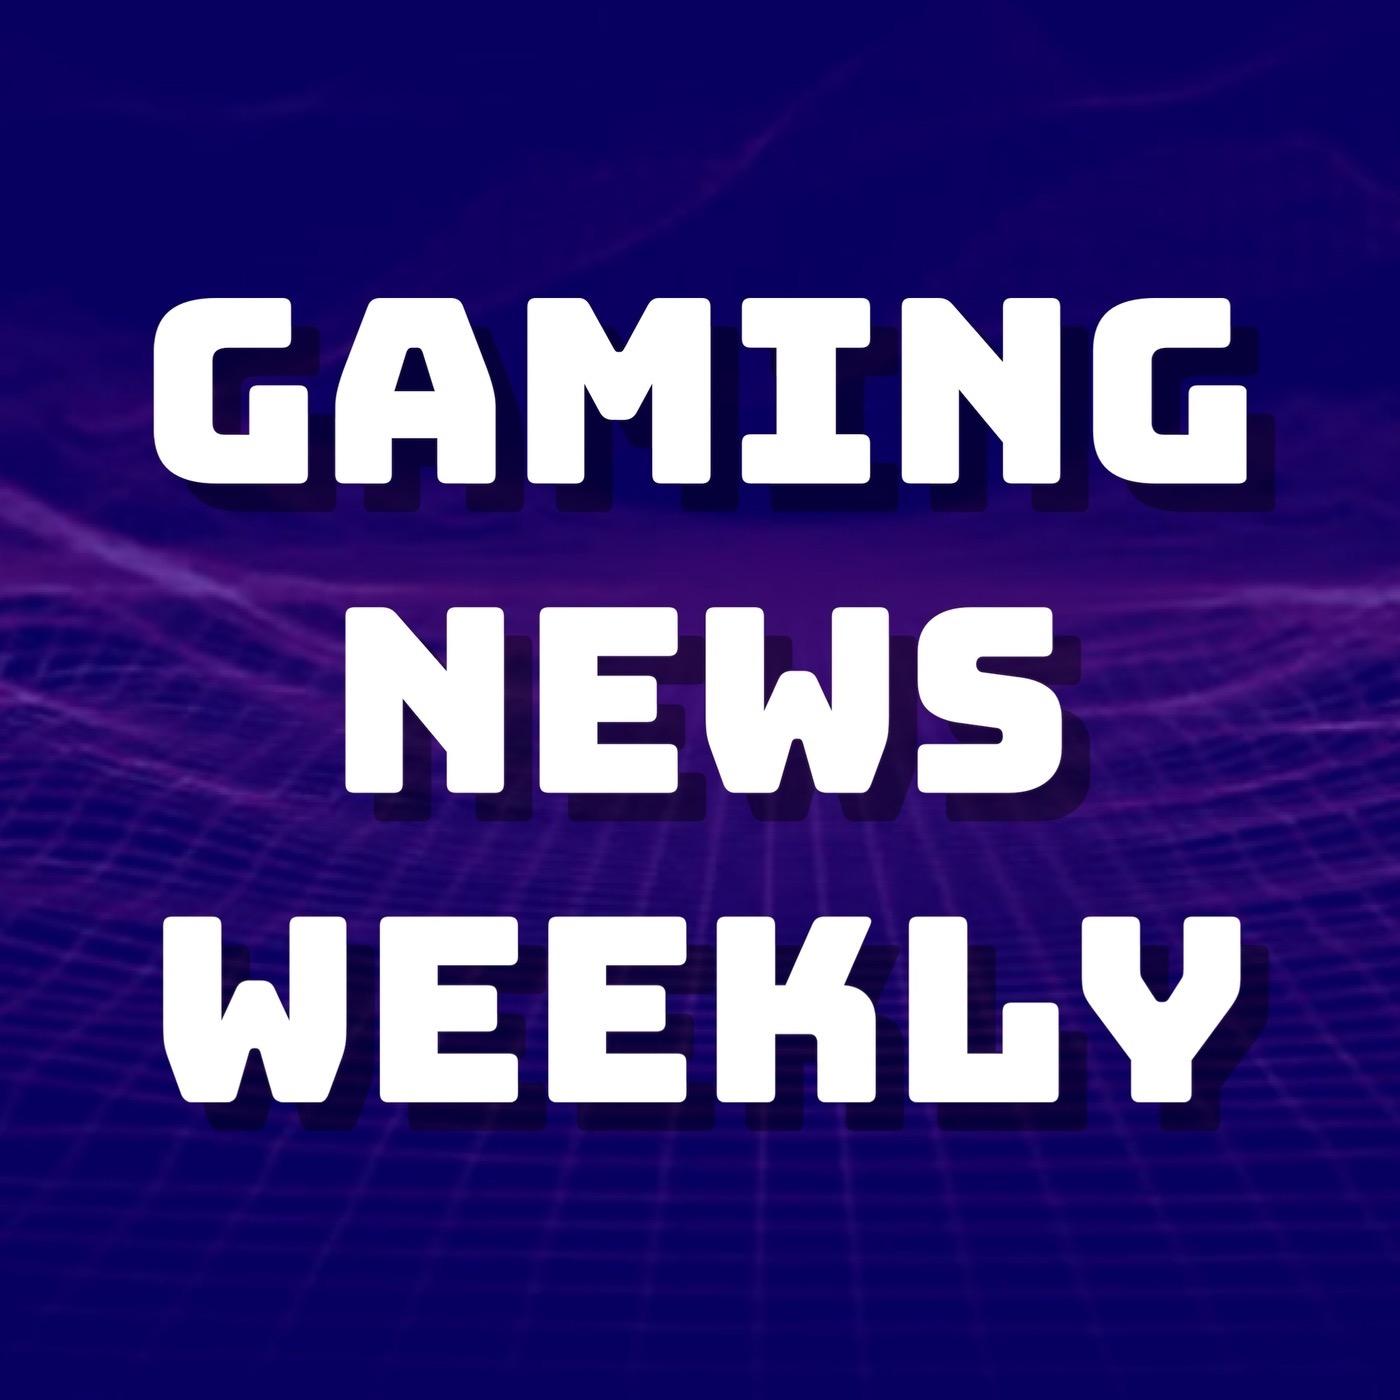 GNW - Gaming News Weekly